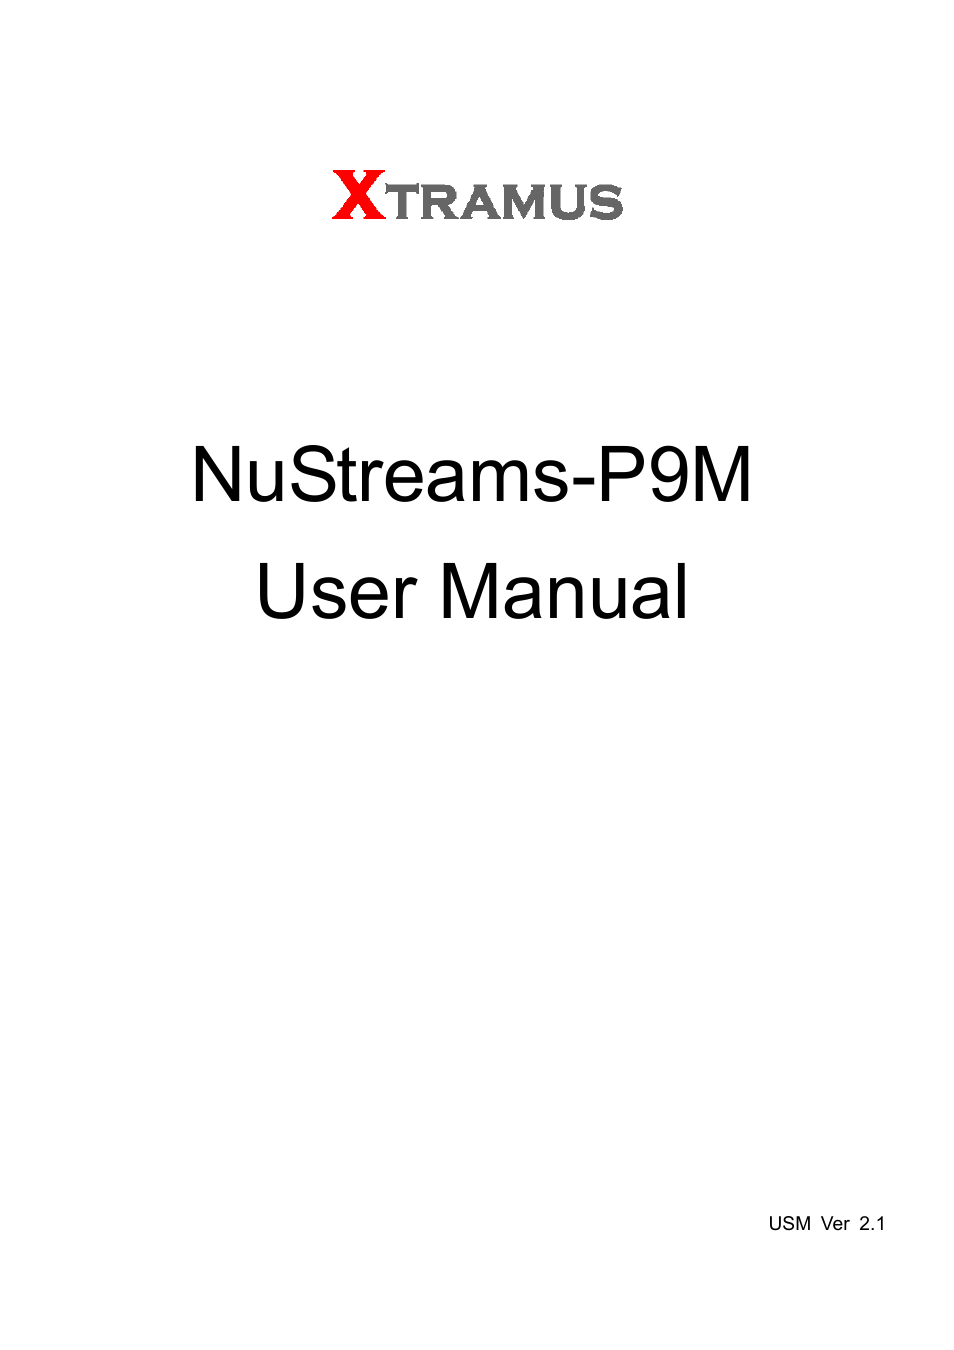 Xtramus NuStreams-P9M V2.1 User Manual | 46 pages